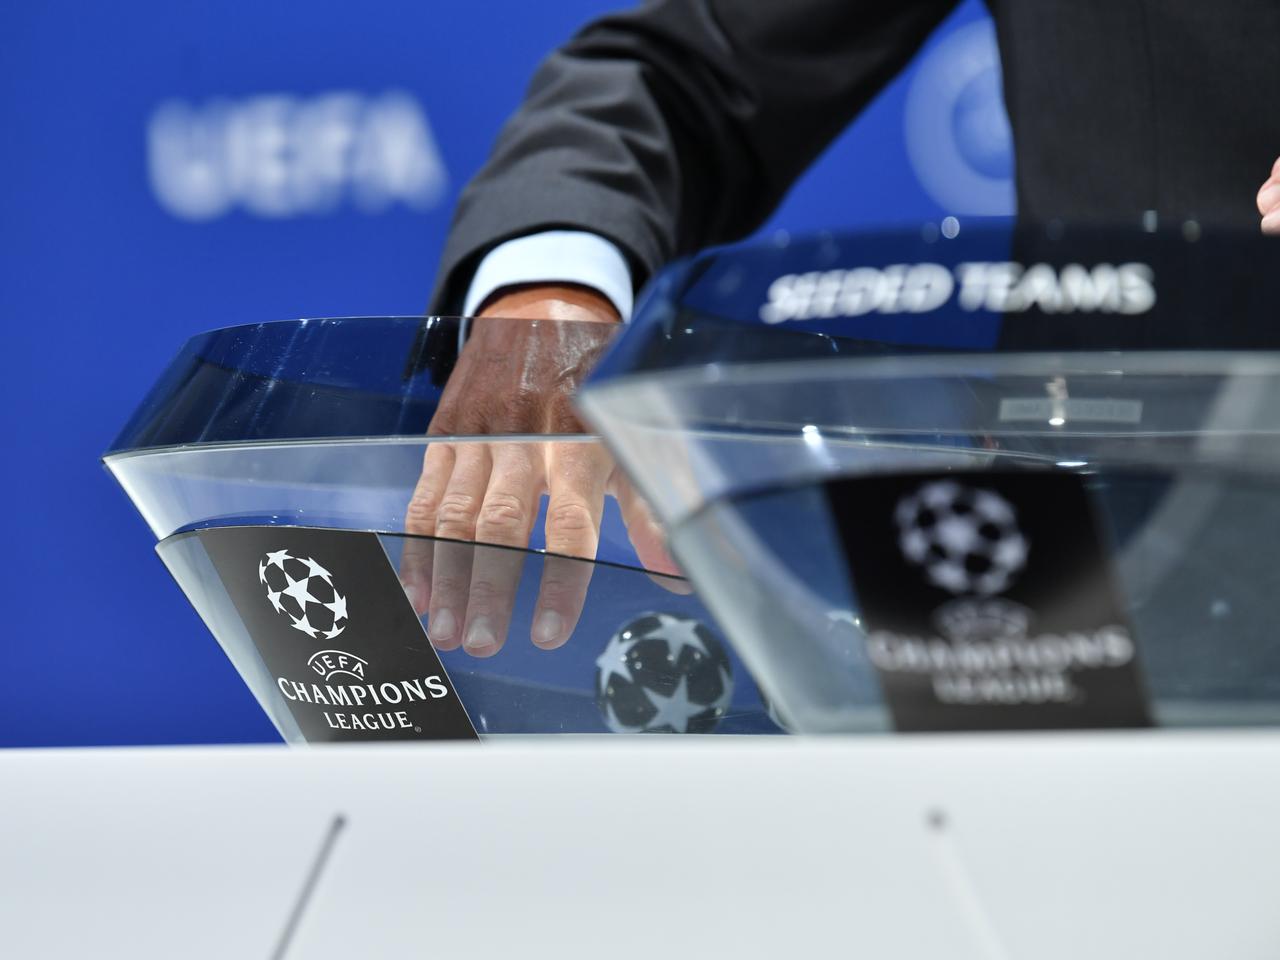 UEFA Champions League 2020/21 Preliminary Round Draw